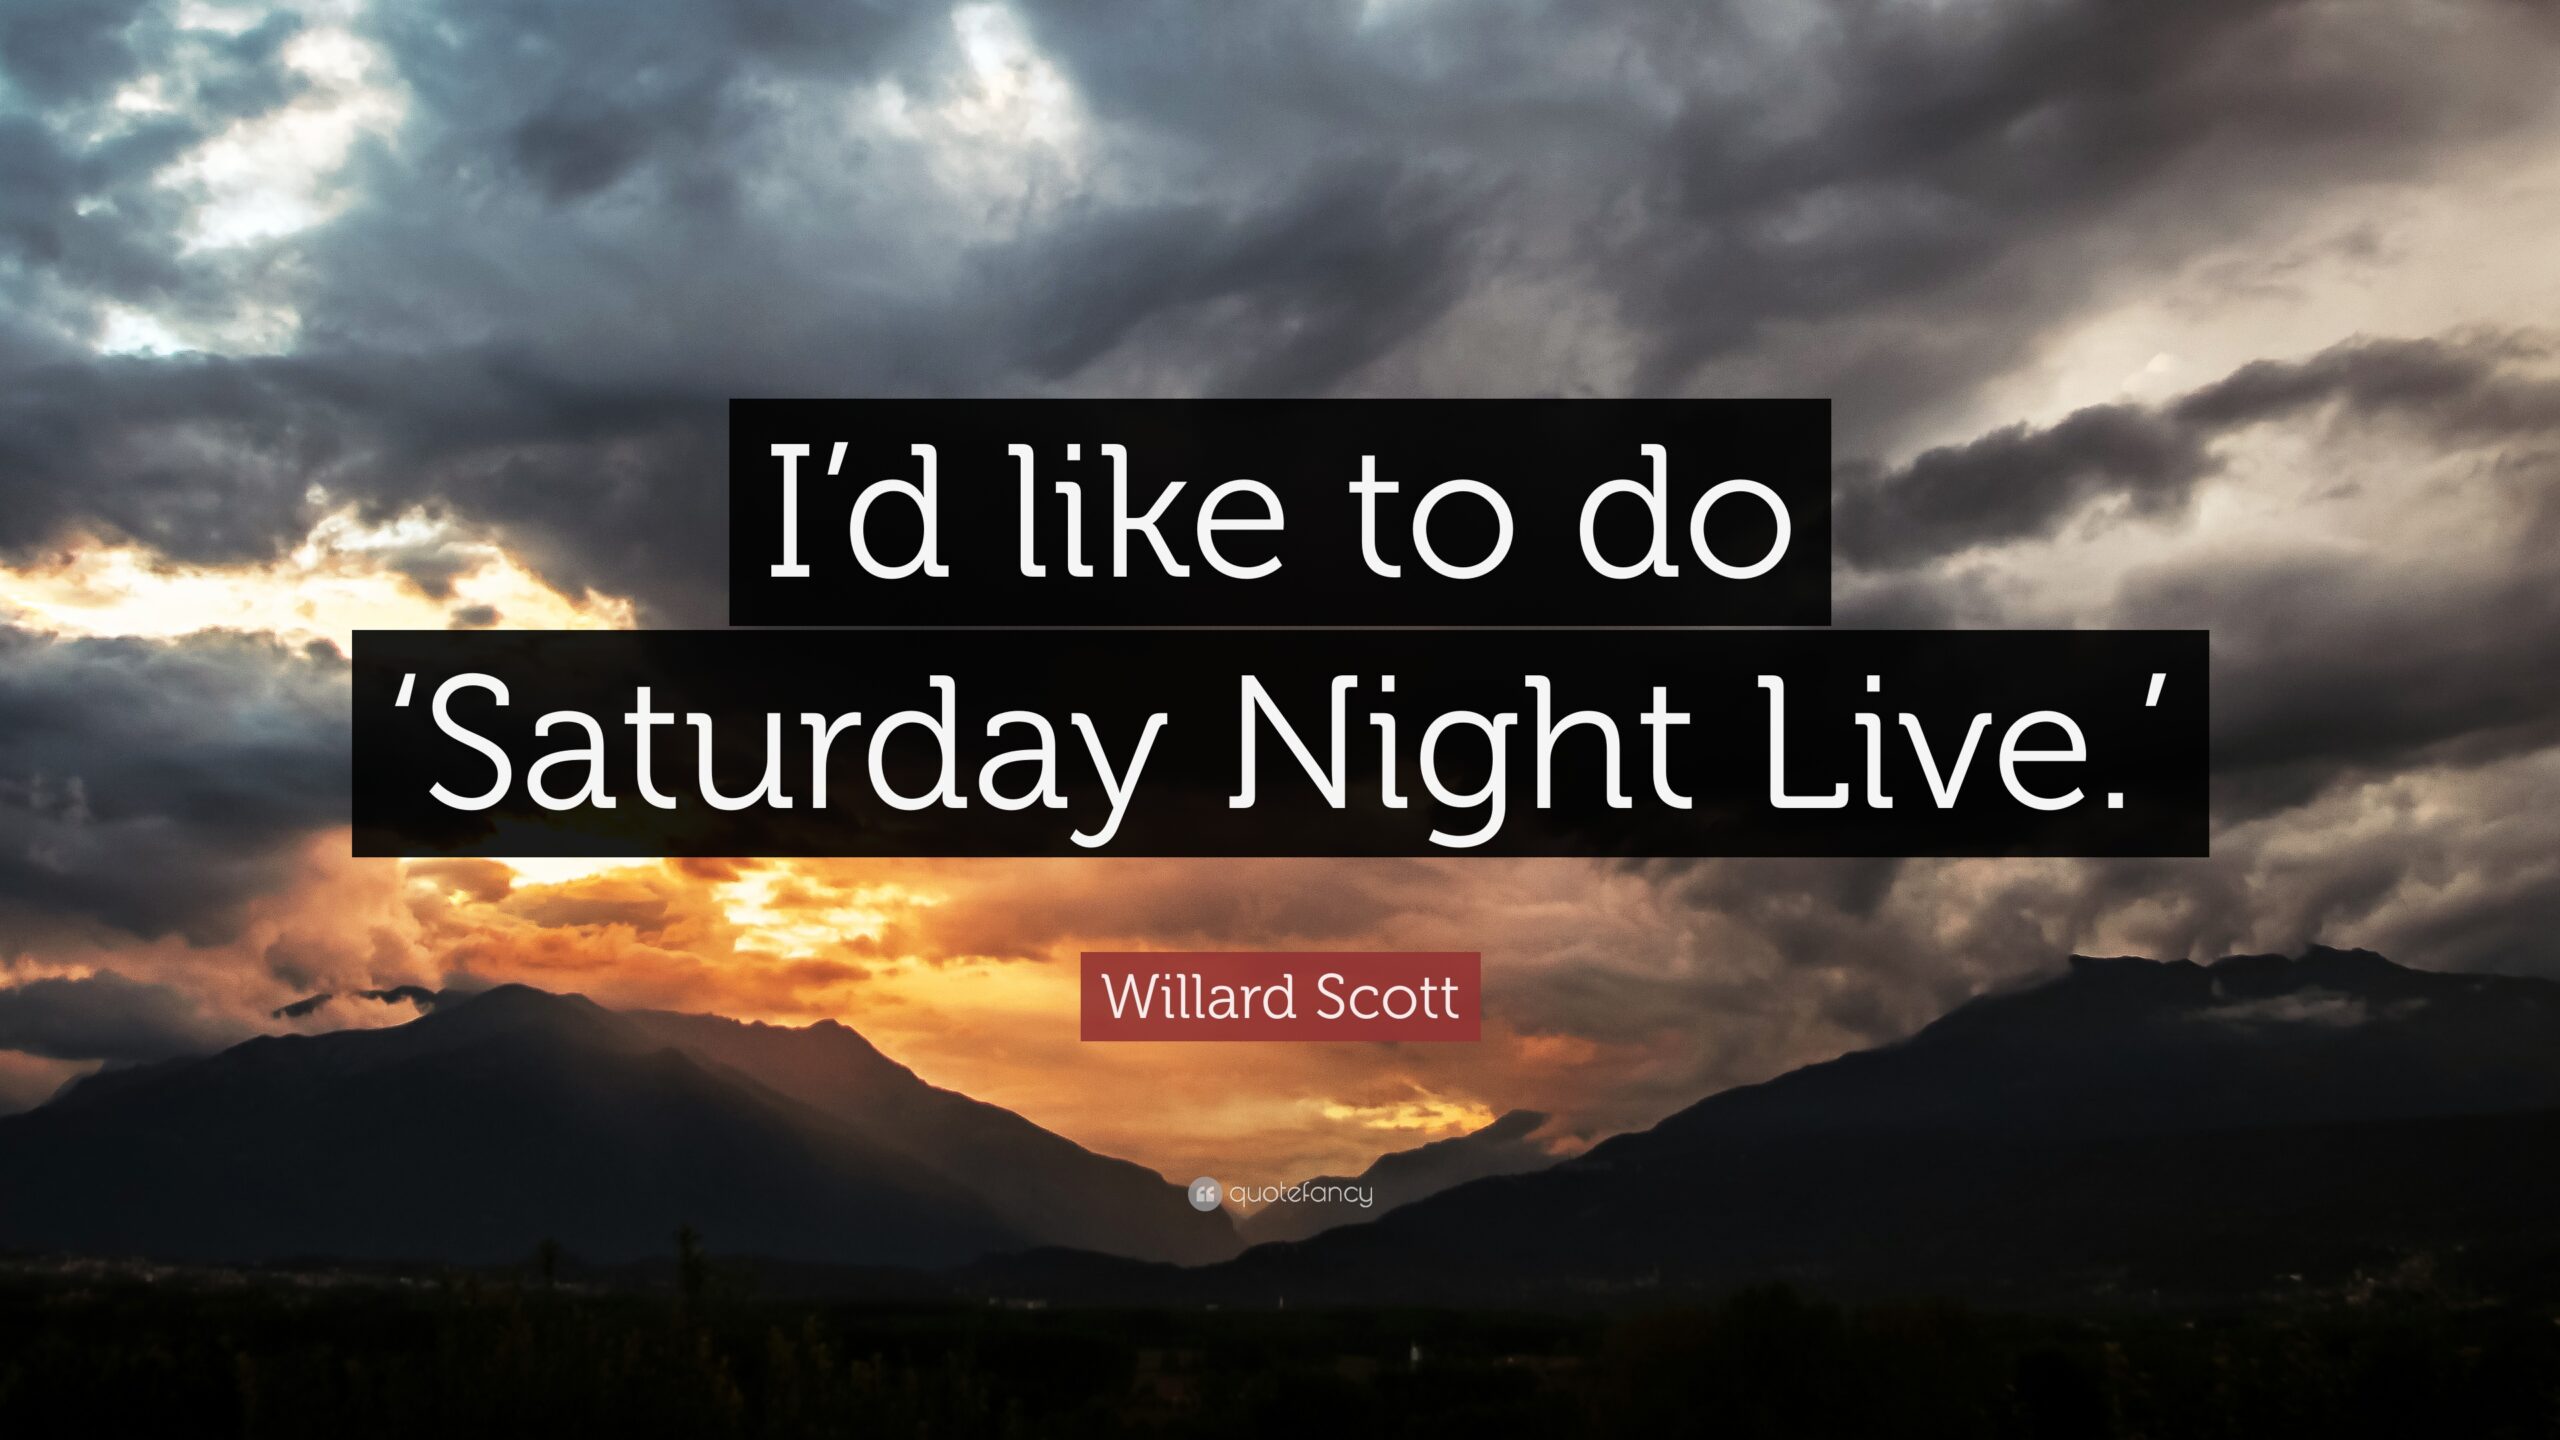 Willard Scott Quote “I’d like to do ‘Saturday Night Live’”